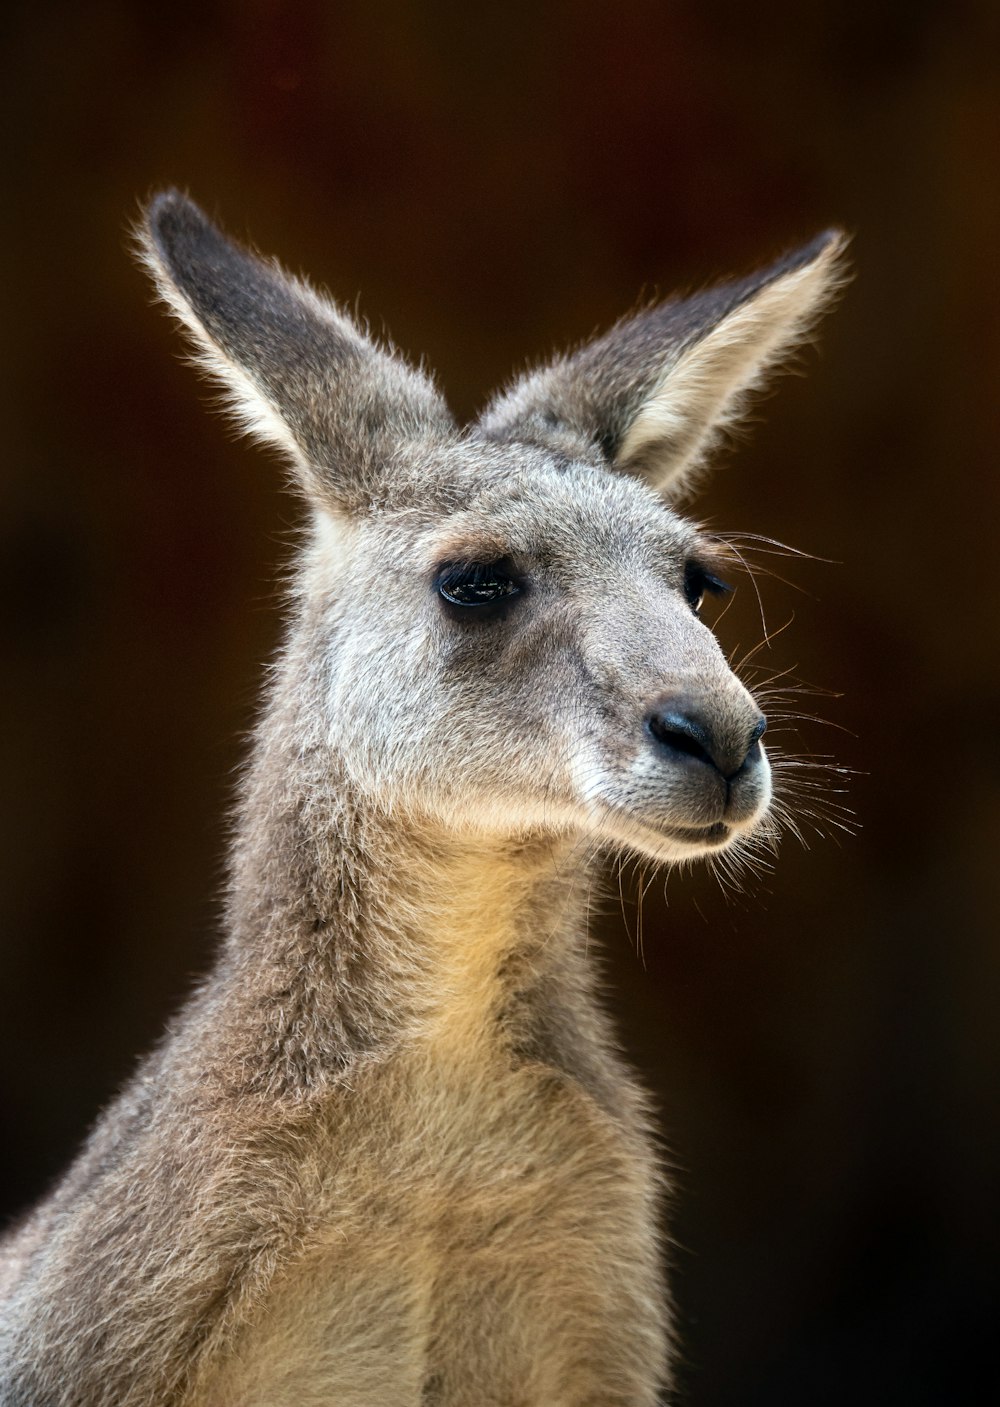 brown kangaroo in close up photography